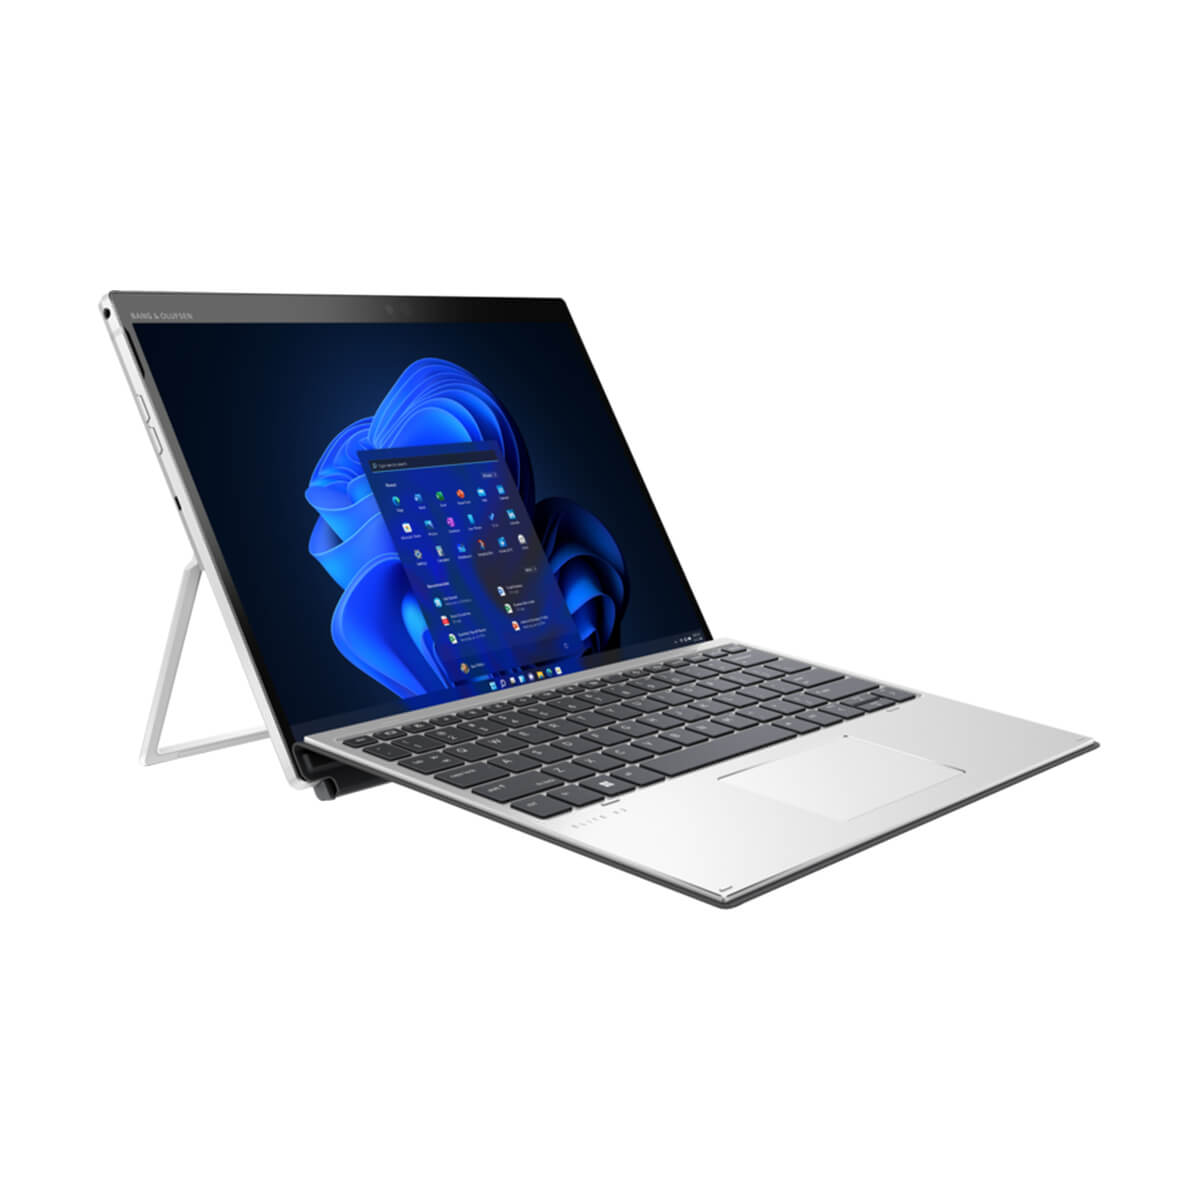 Used HP Elite X2 Core i7 (16GB RAM + 256GB SSD) Laptop